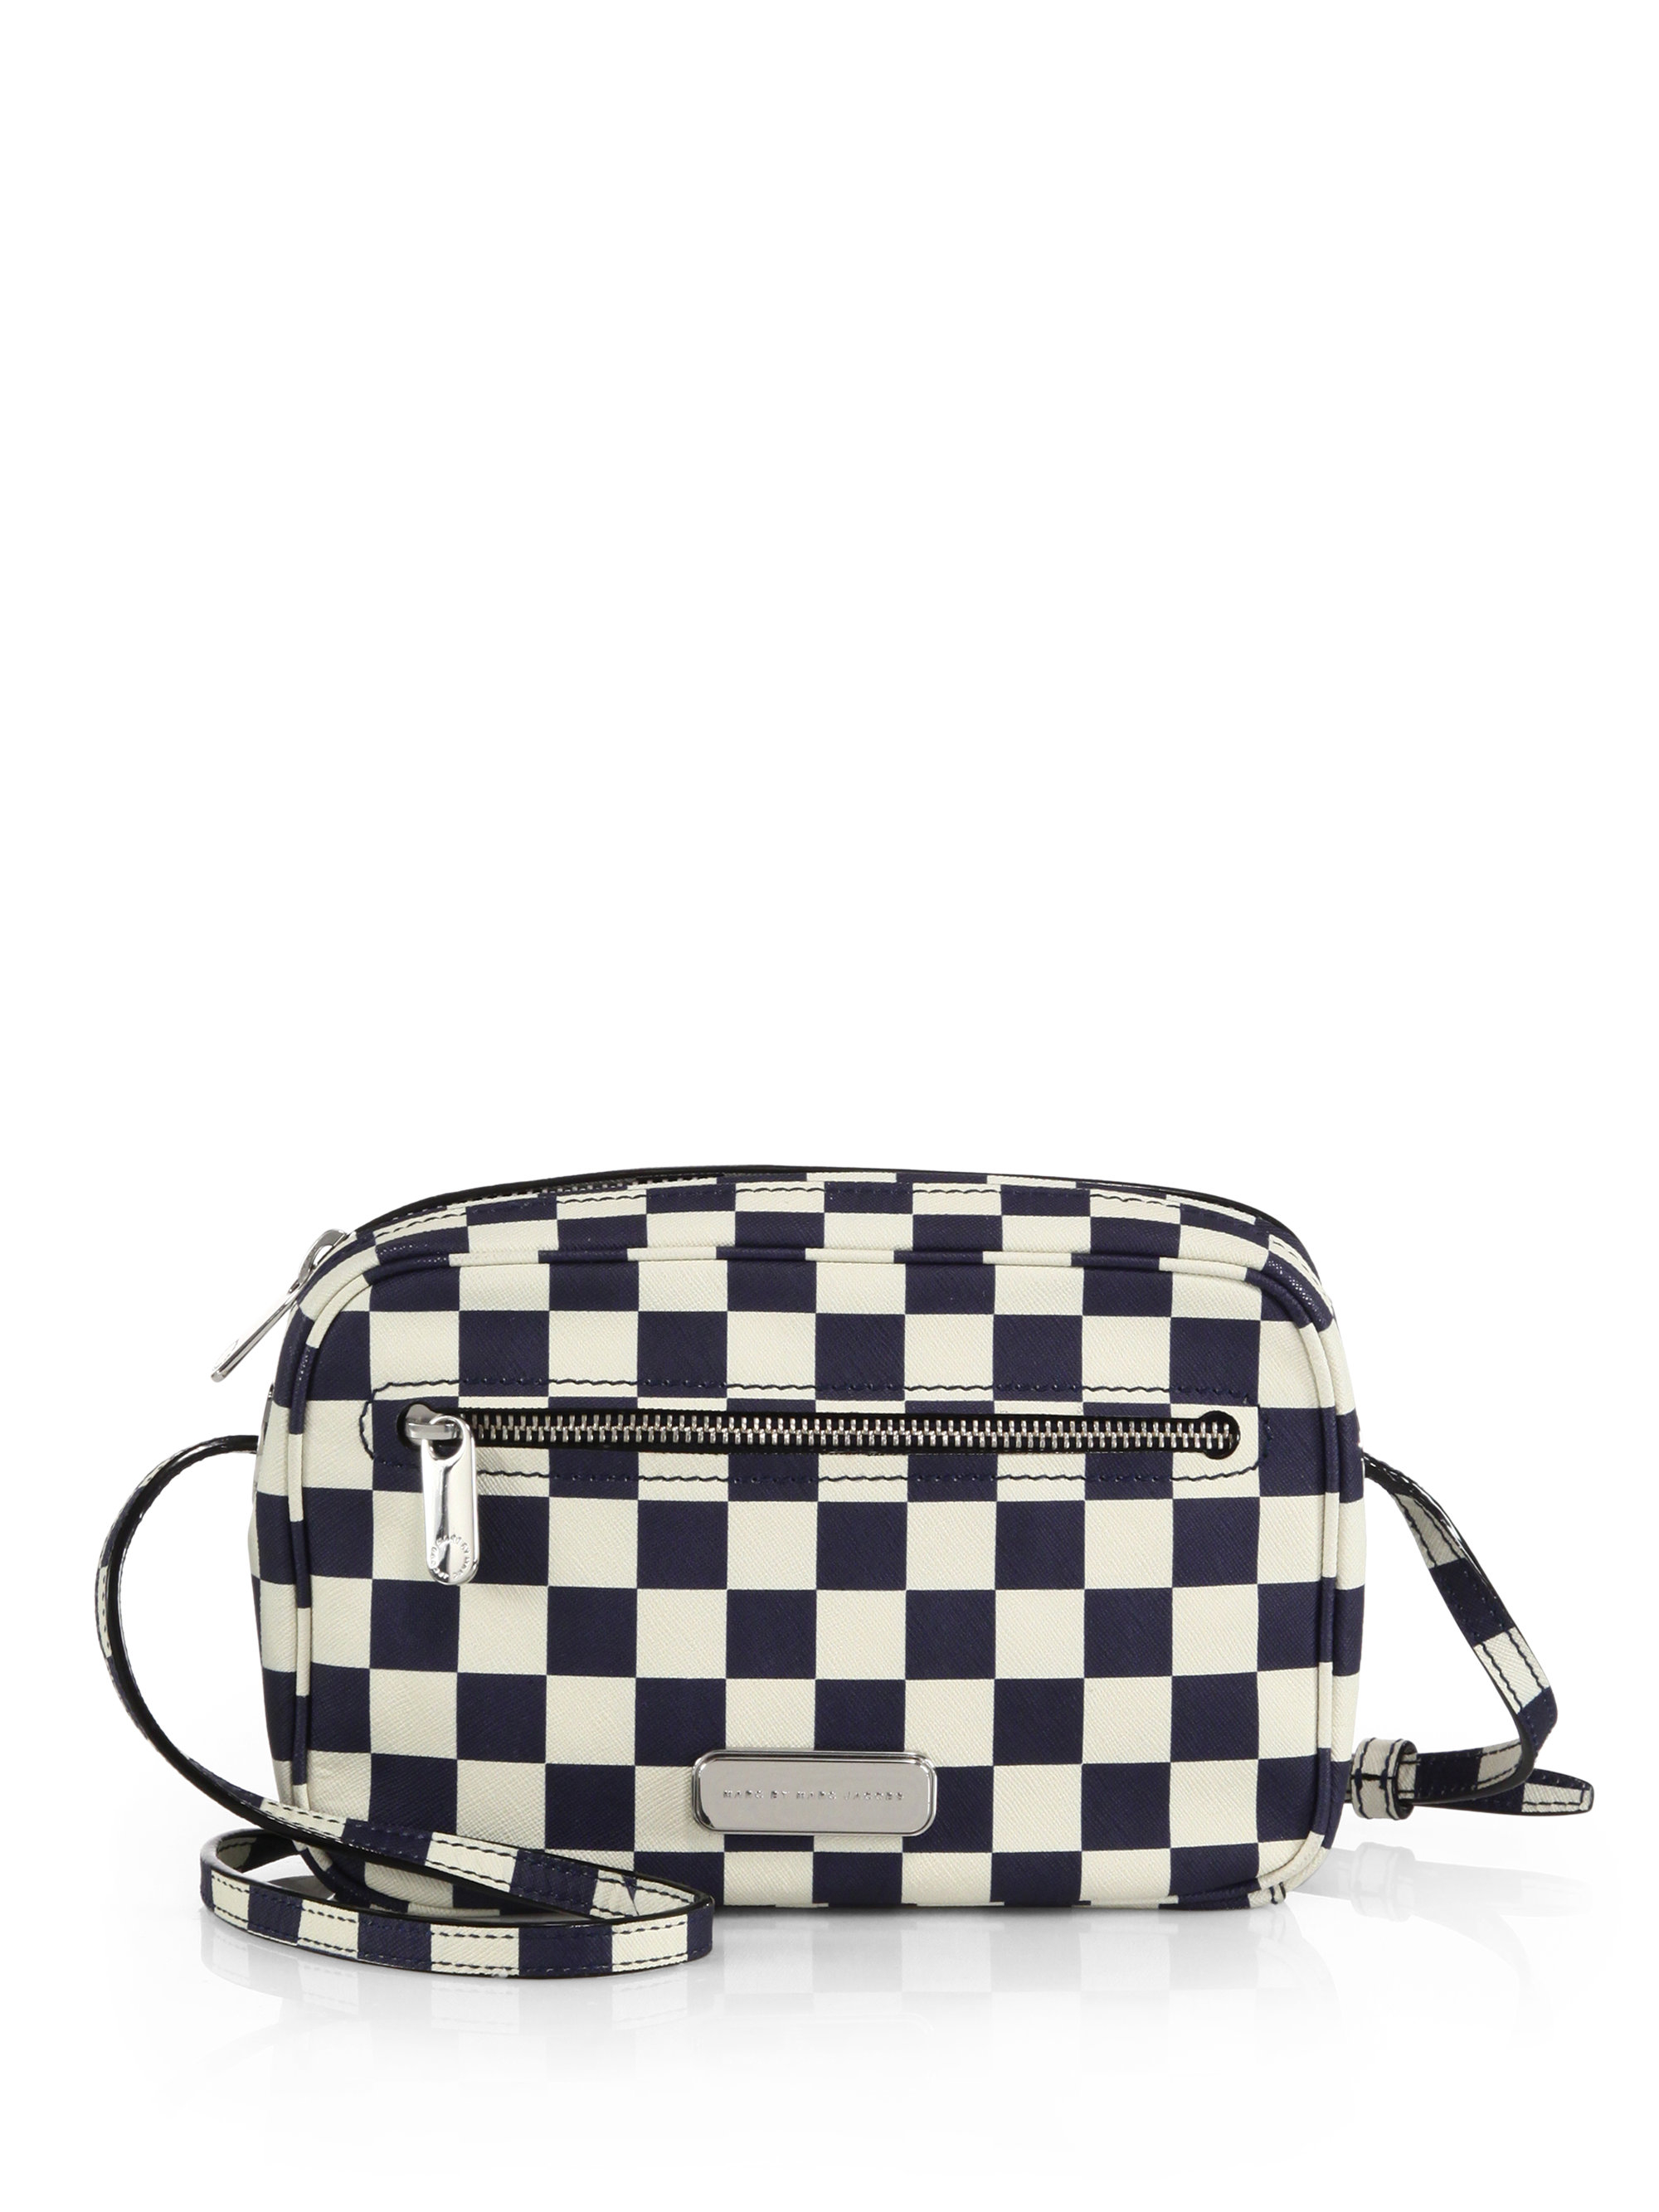 white checkered bag